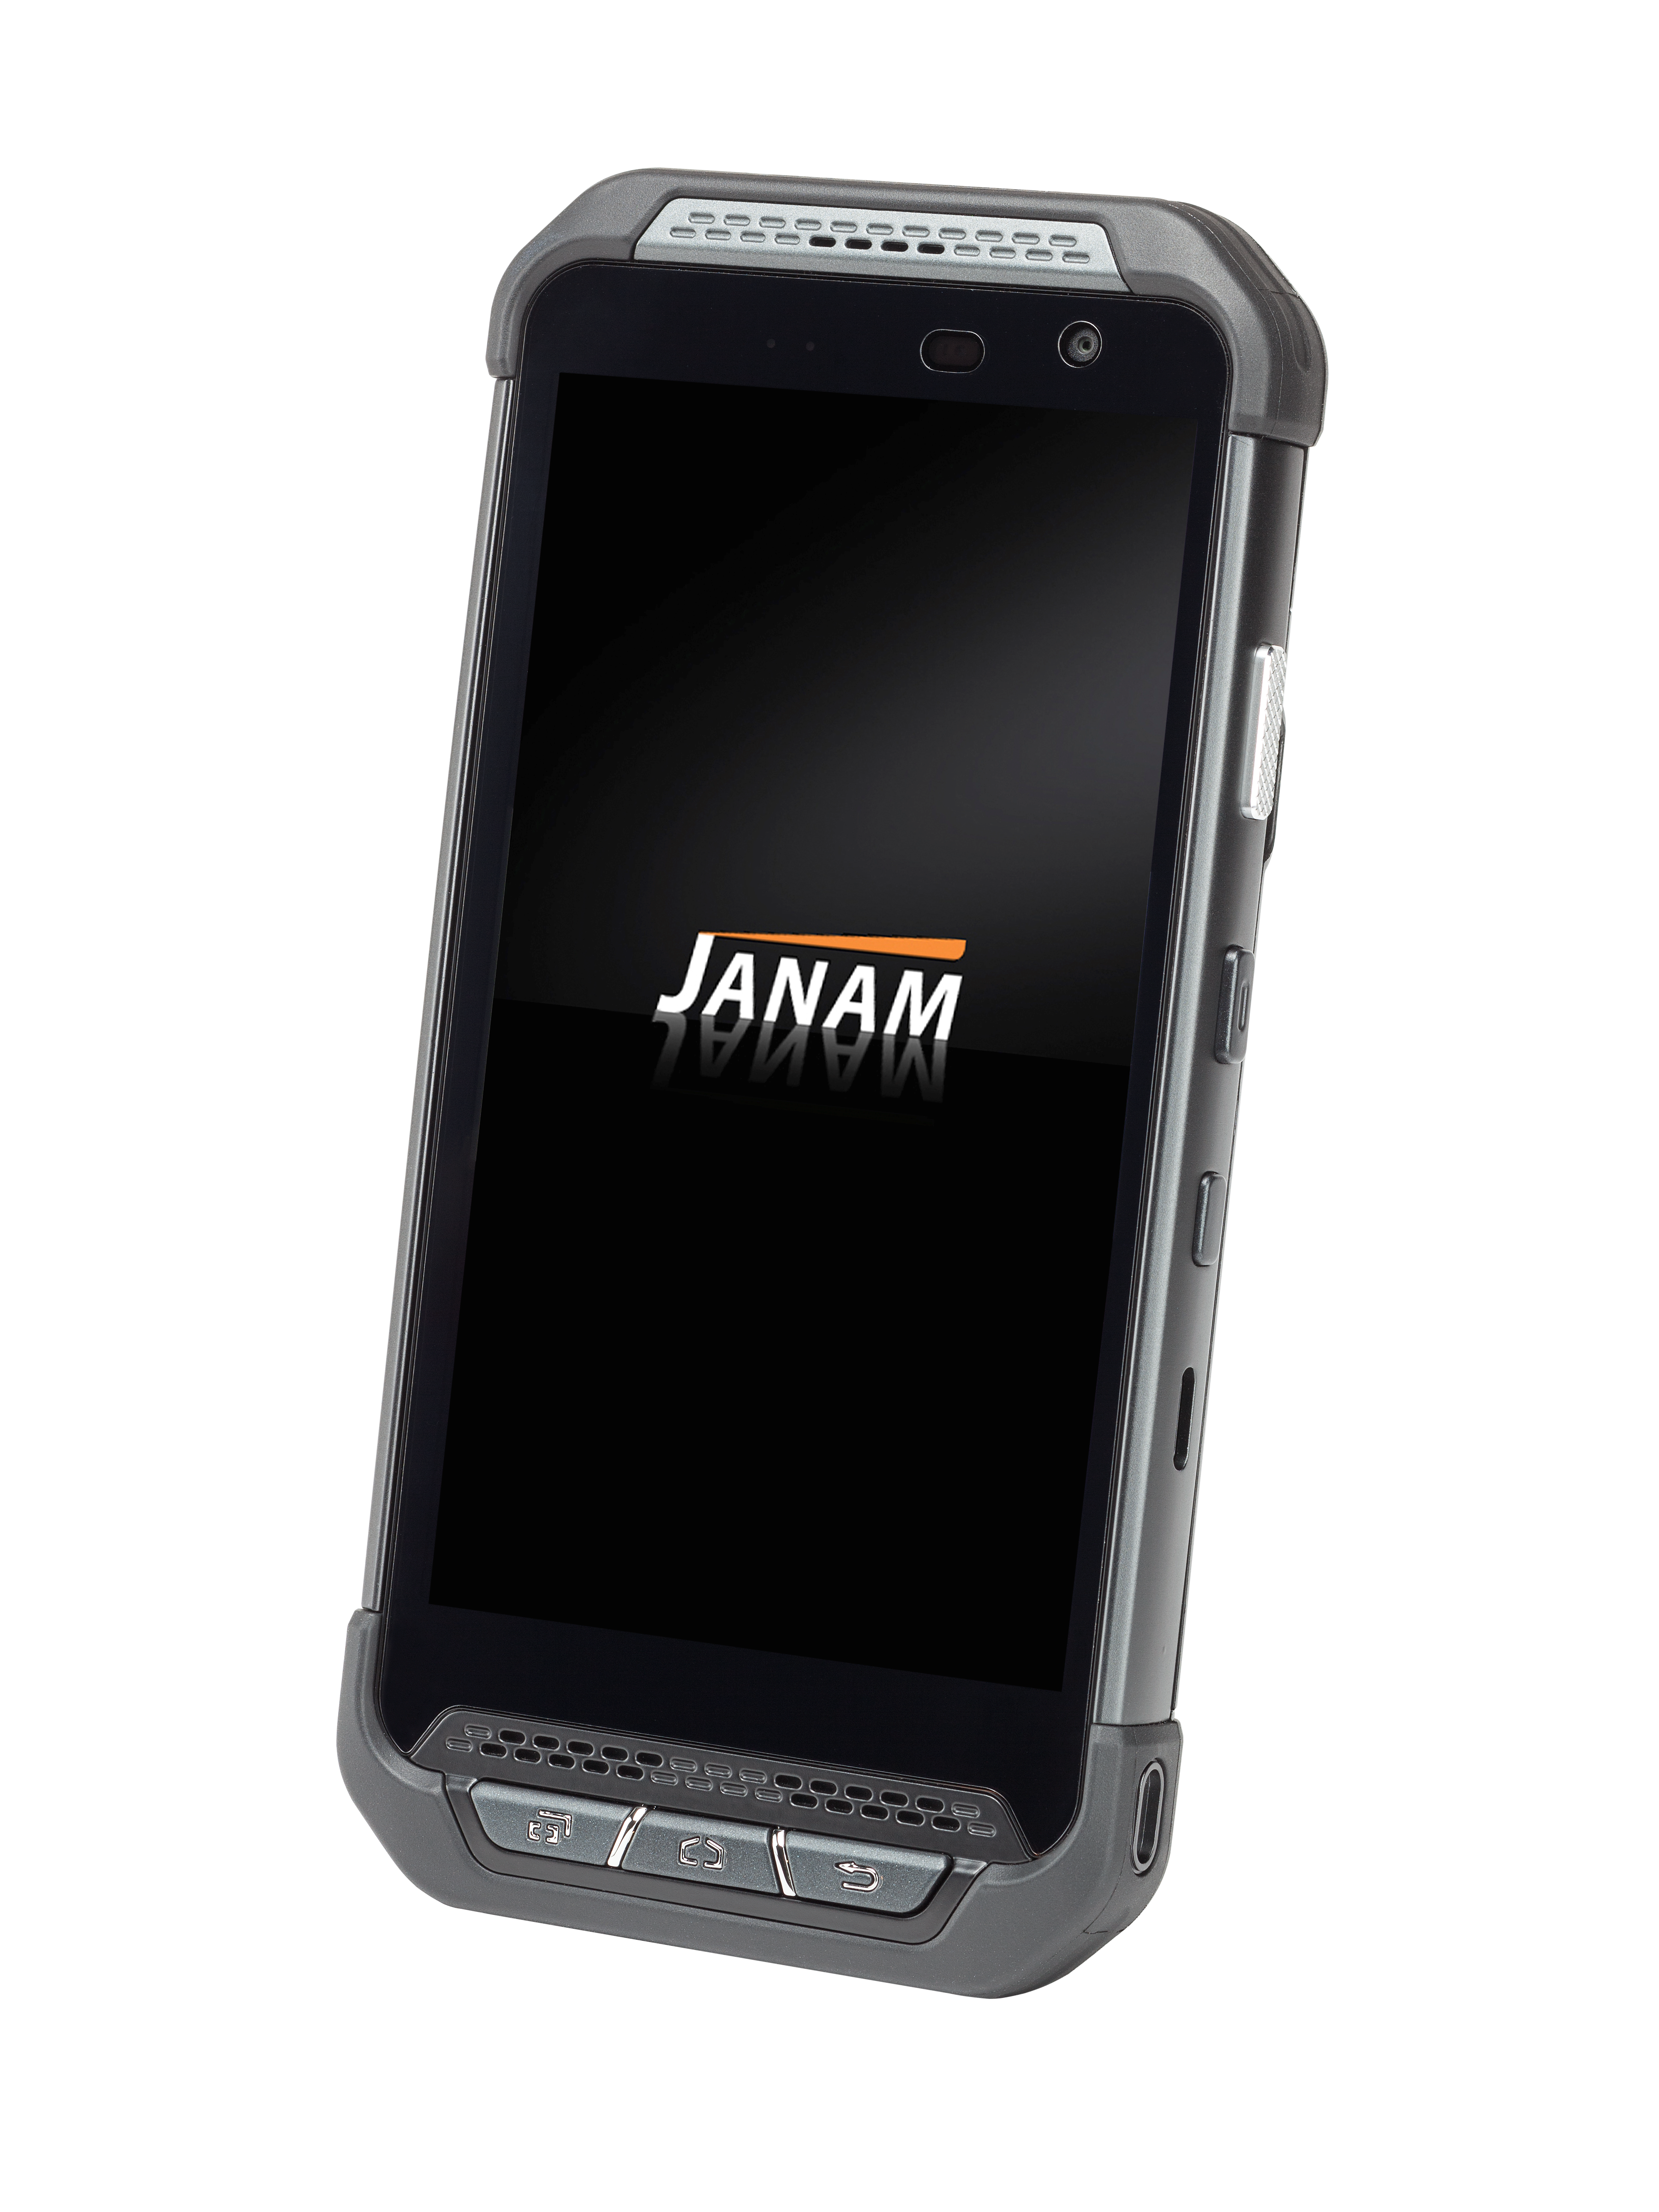 Xt30 Nthgrkgw00 Janam Technologies Xt0 Posguys Com